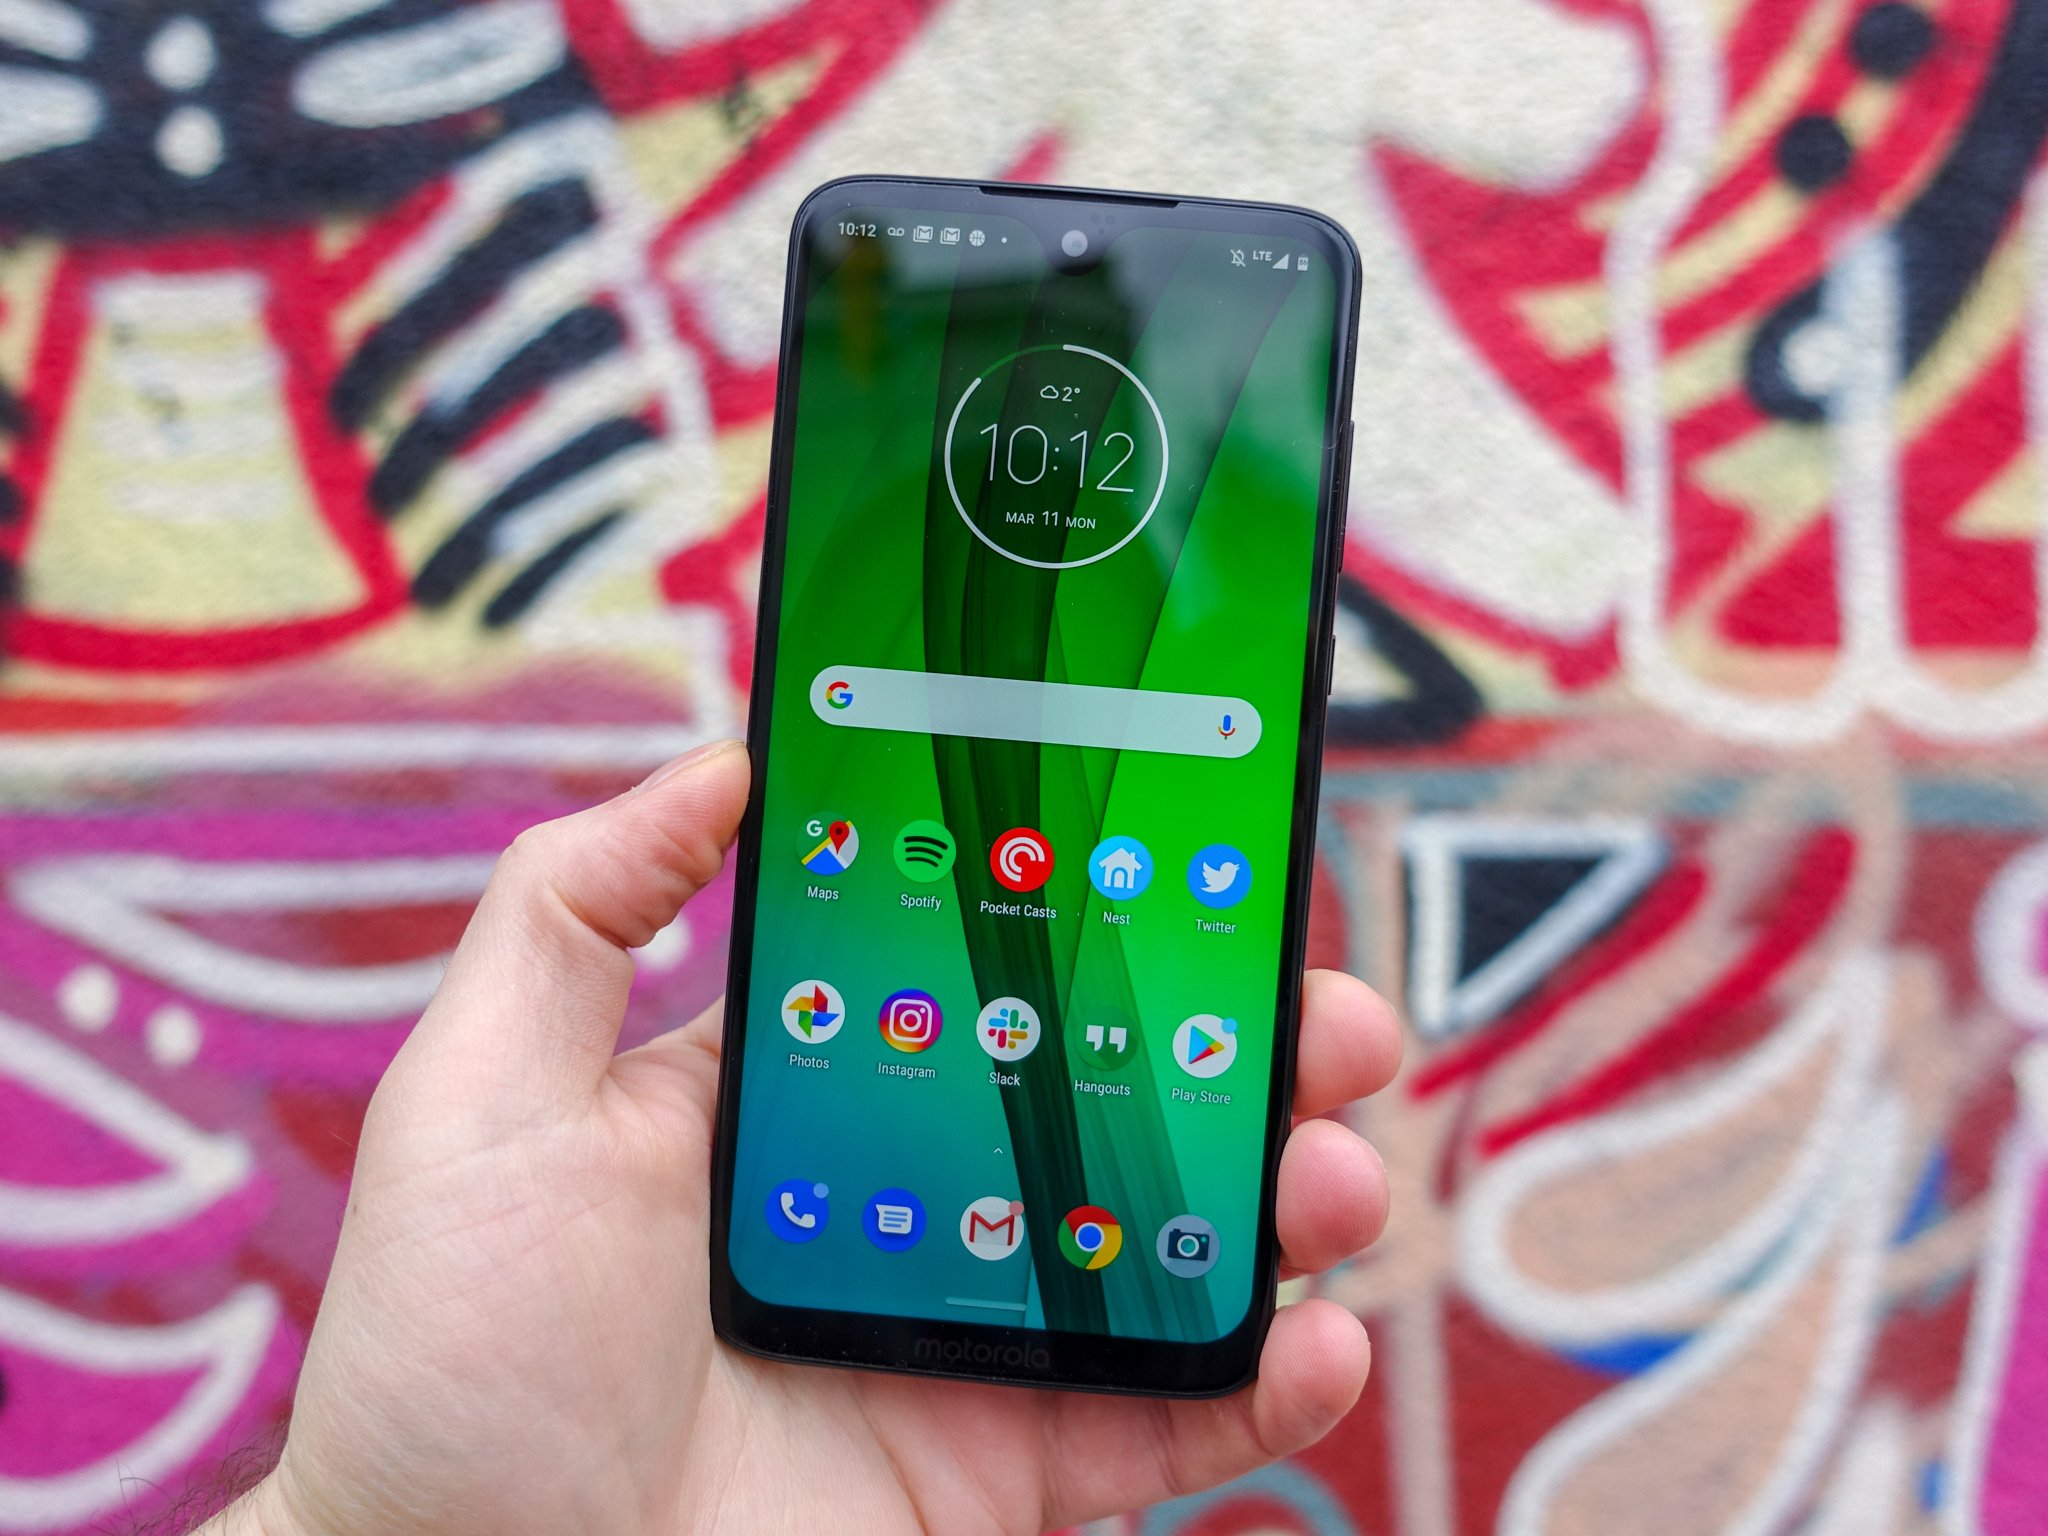 Hertog Verkeersopstopping Draai vast Moto G7 Review: 2019's best budget phone so far | Android Central